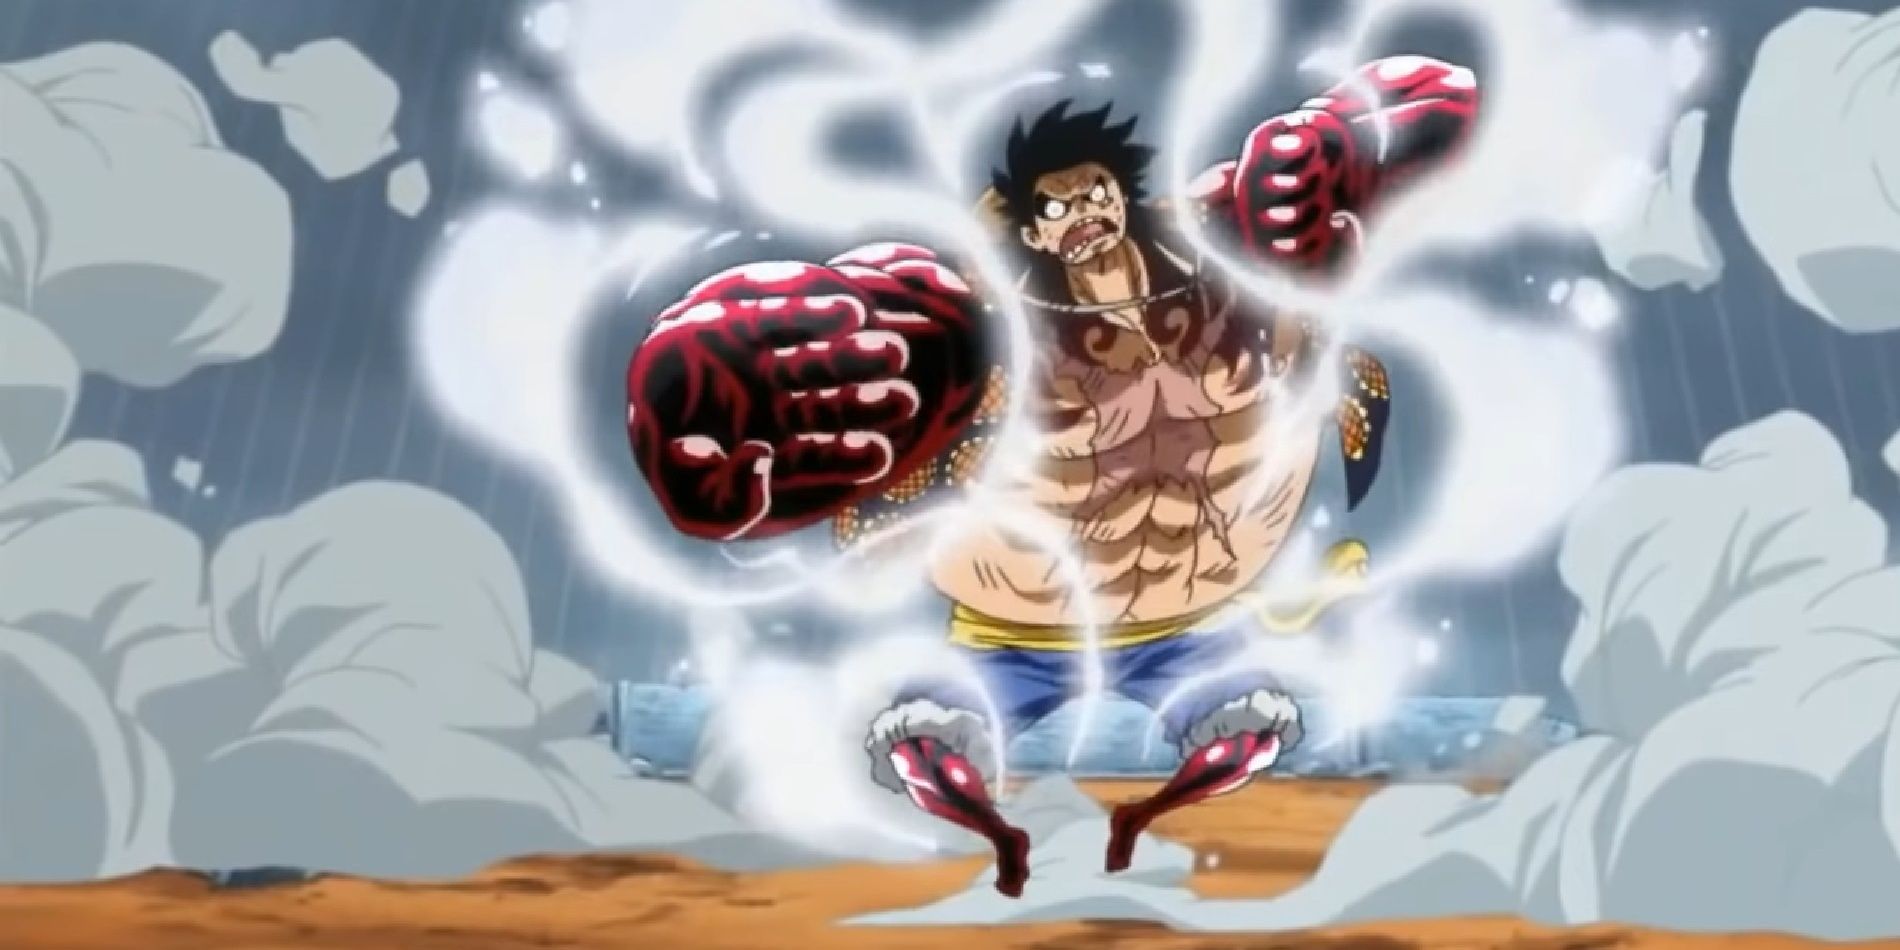 Monkey D. Luffy using Gear 4 Bounce Man against Donquixote Doflamingo in One Piece's Dressrosa Arc.